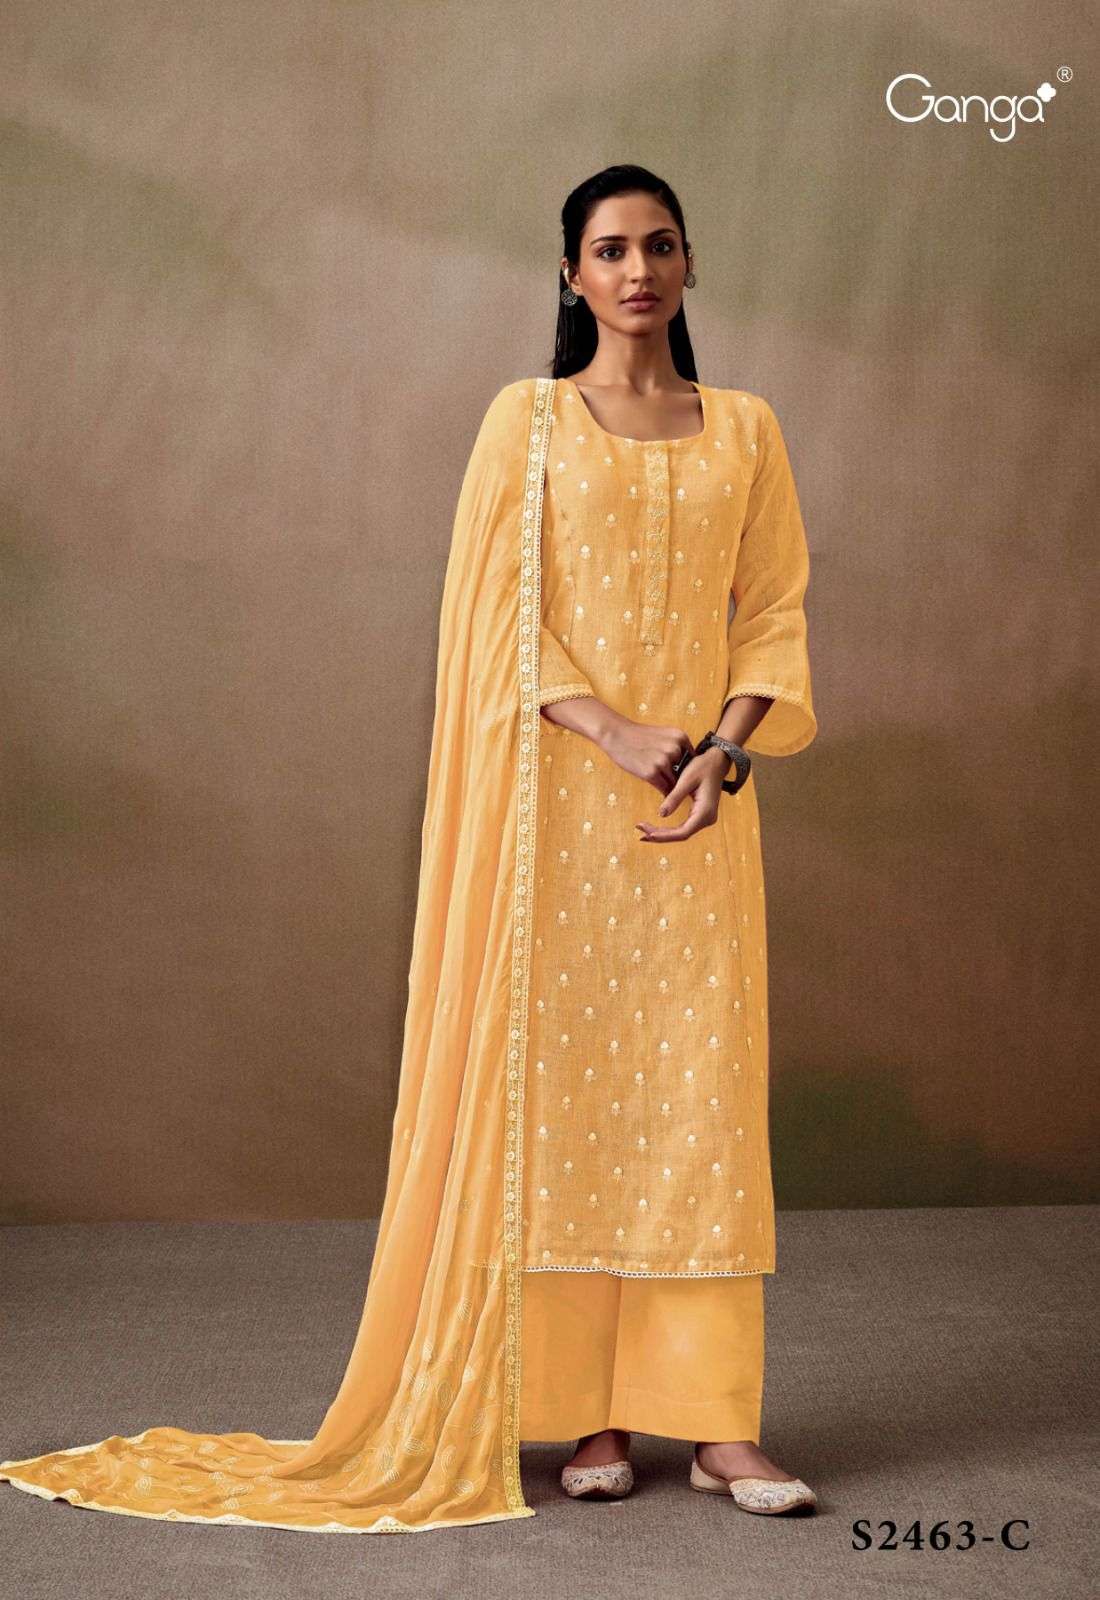 Ganga Naazia 2463 Ladies Wear Fancy Cotton Dress Catalog Exporters